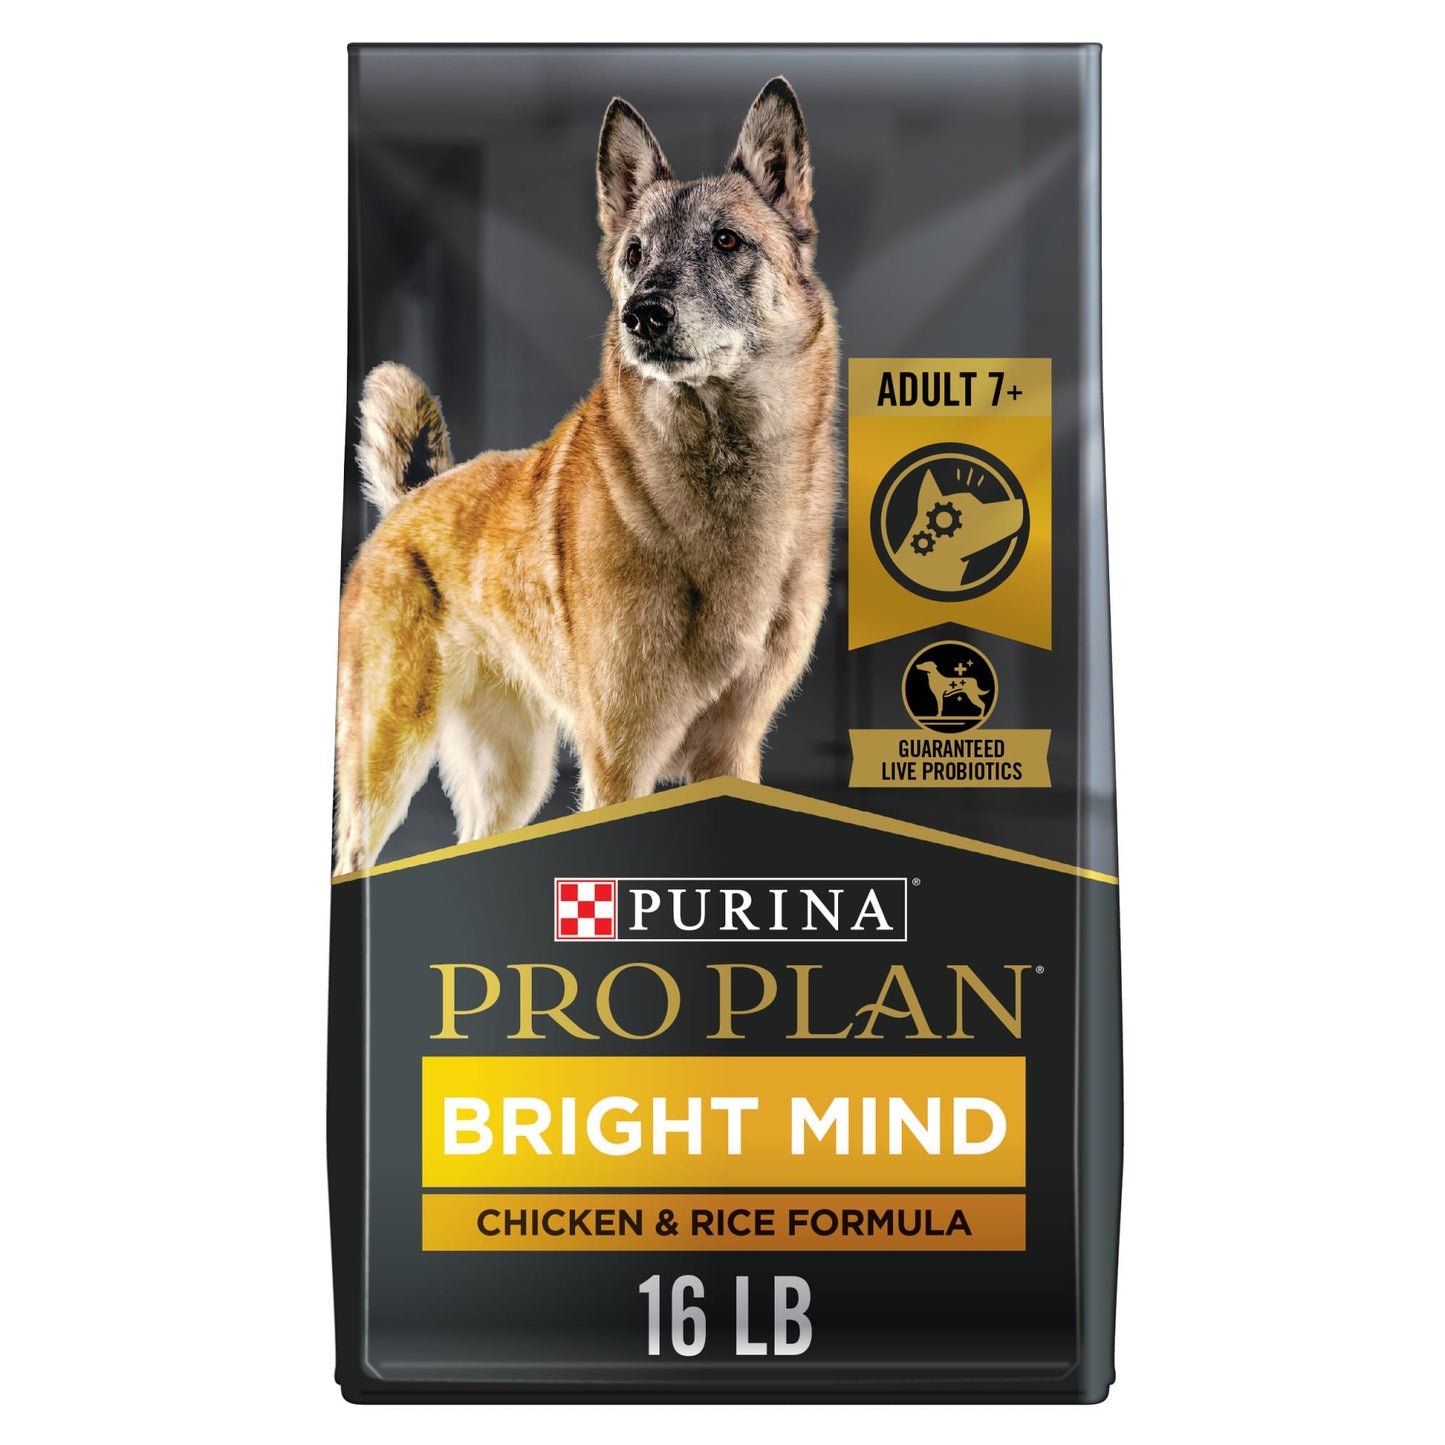 Purina Pro Plan Senior Adult 7+ Bright Mind Dry Dog Food, Chicken & Rice Formula, 16 lb. Bag